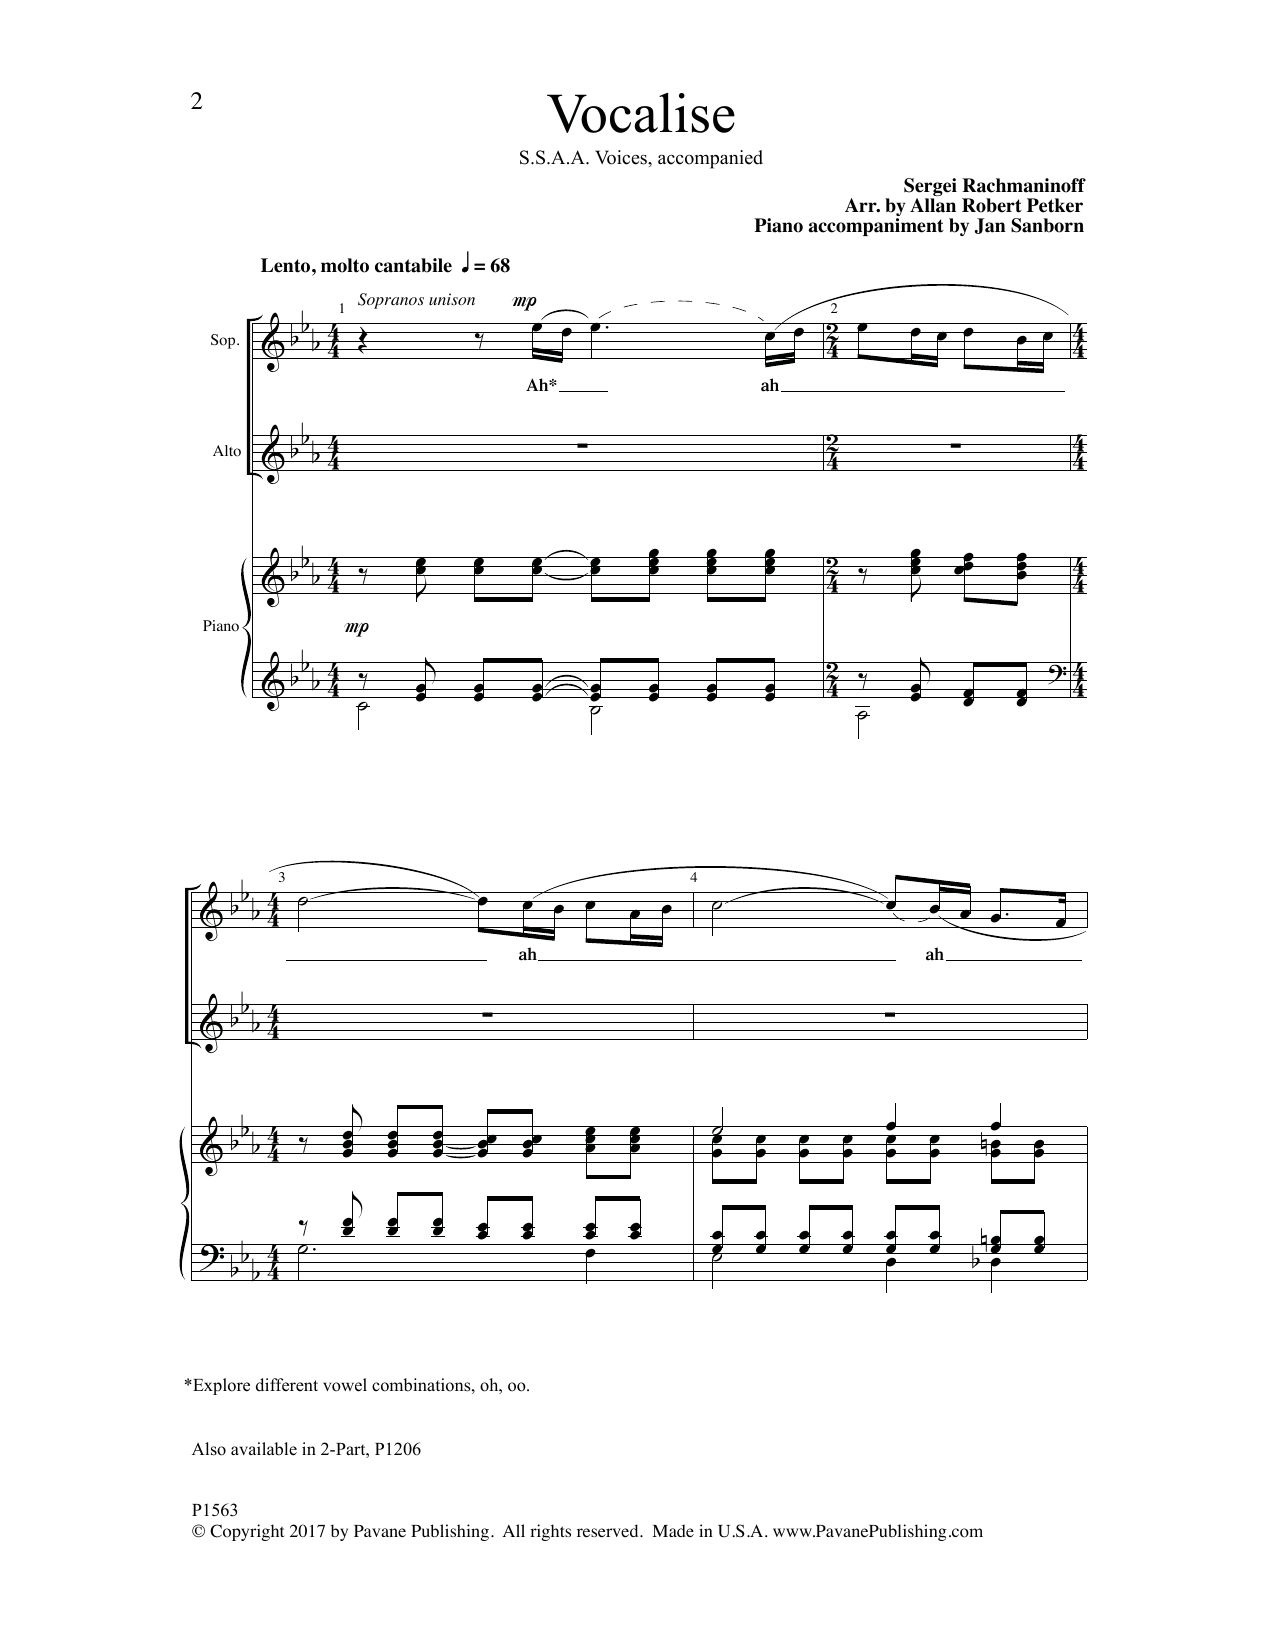 Vocalise sheet music